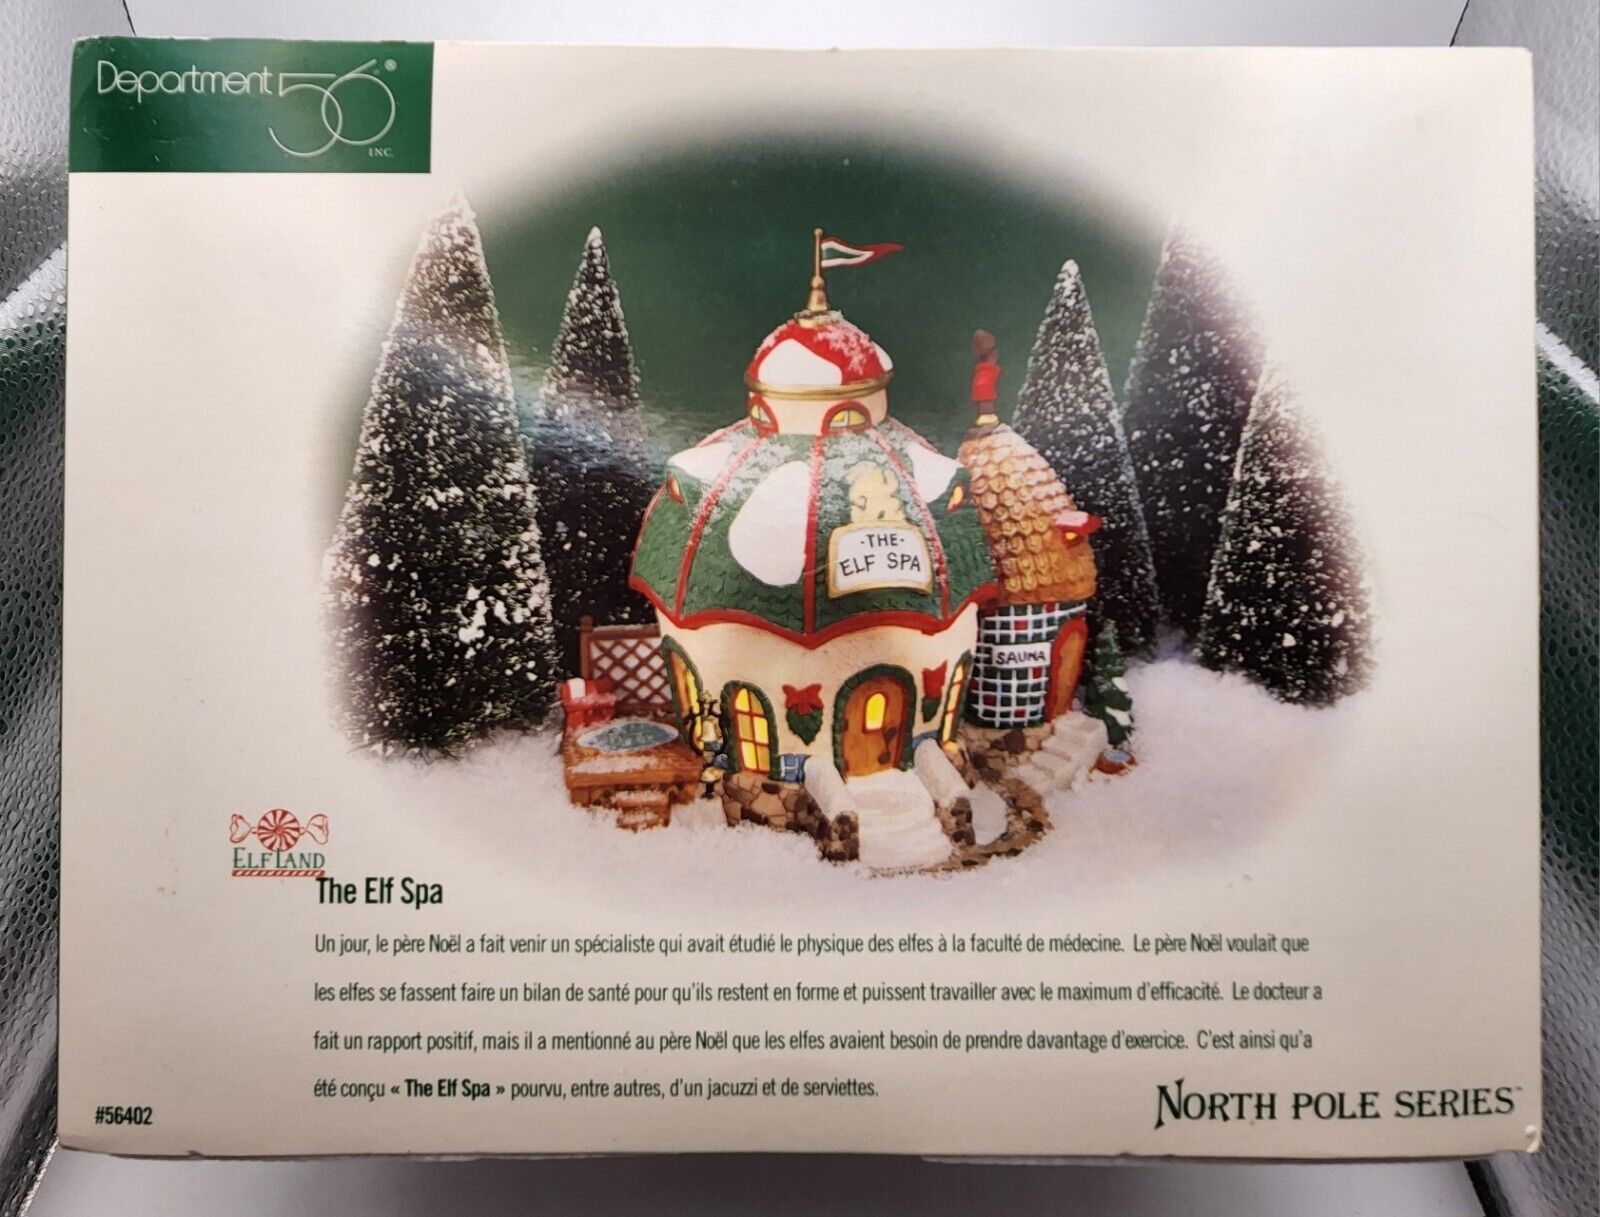 Dept 56 - Elf Spa - North Pole Series 1998 - Brand New